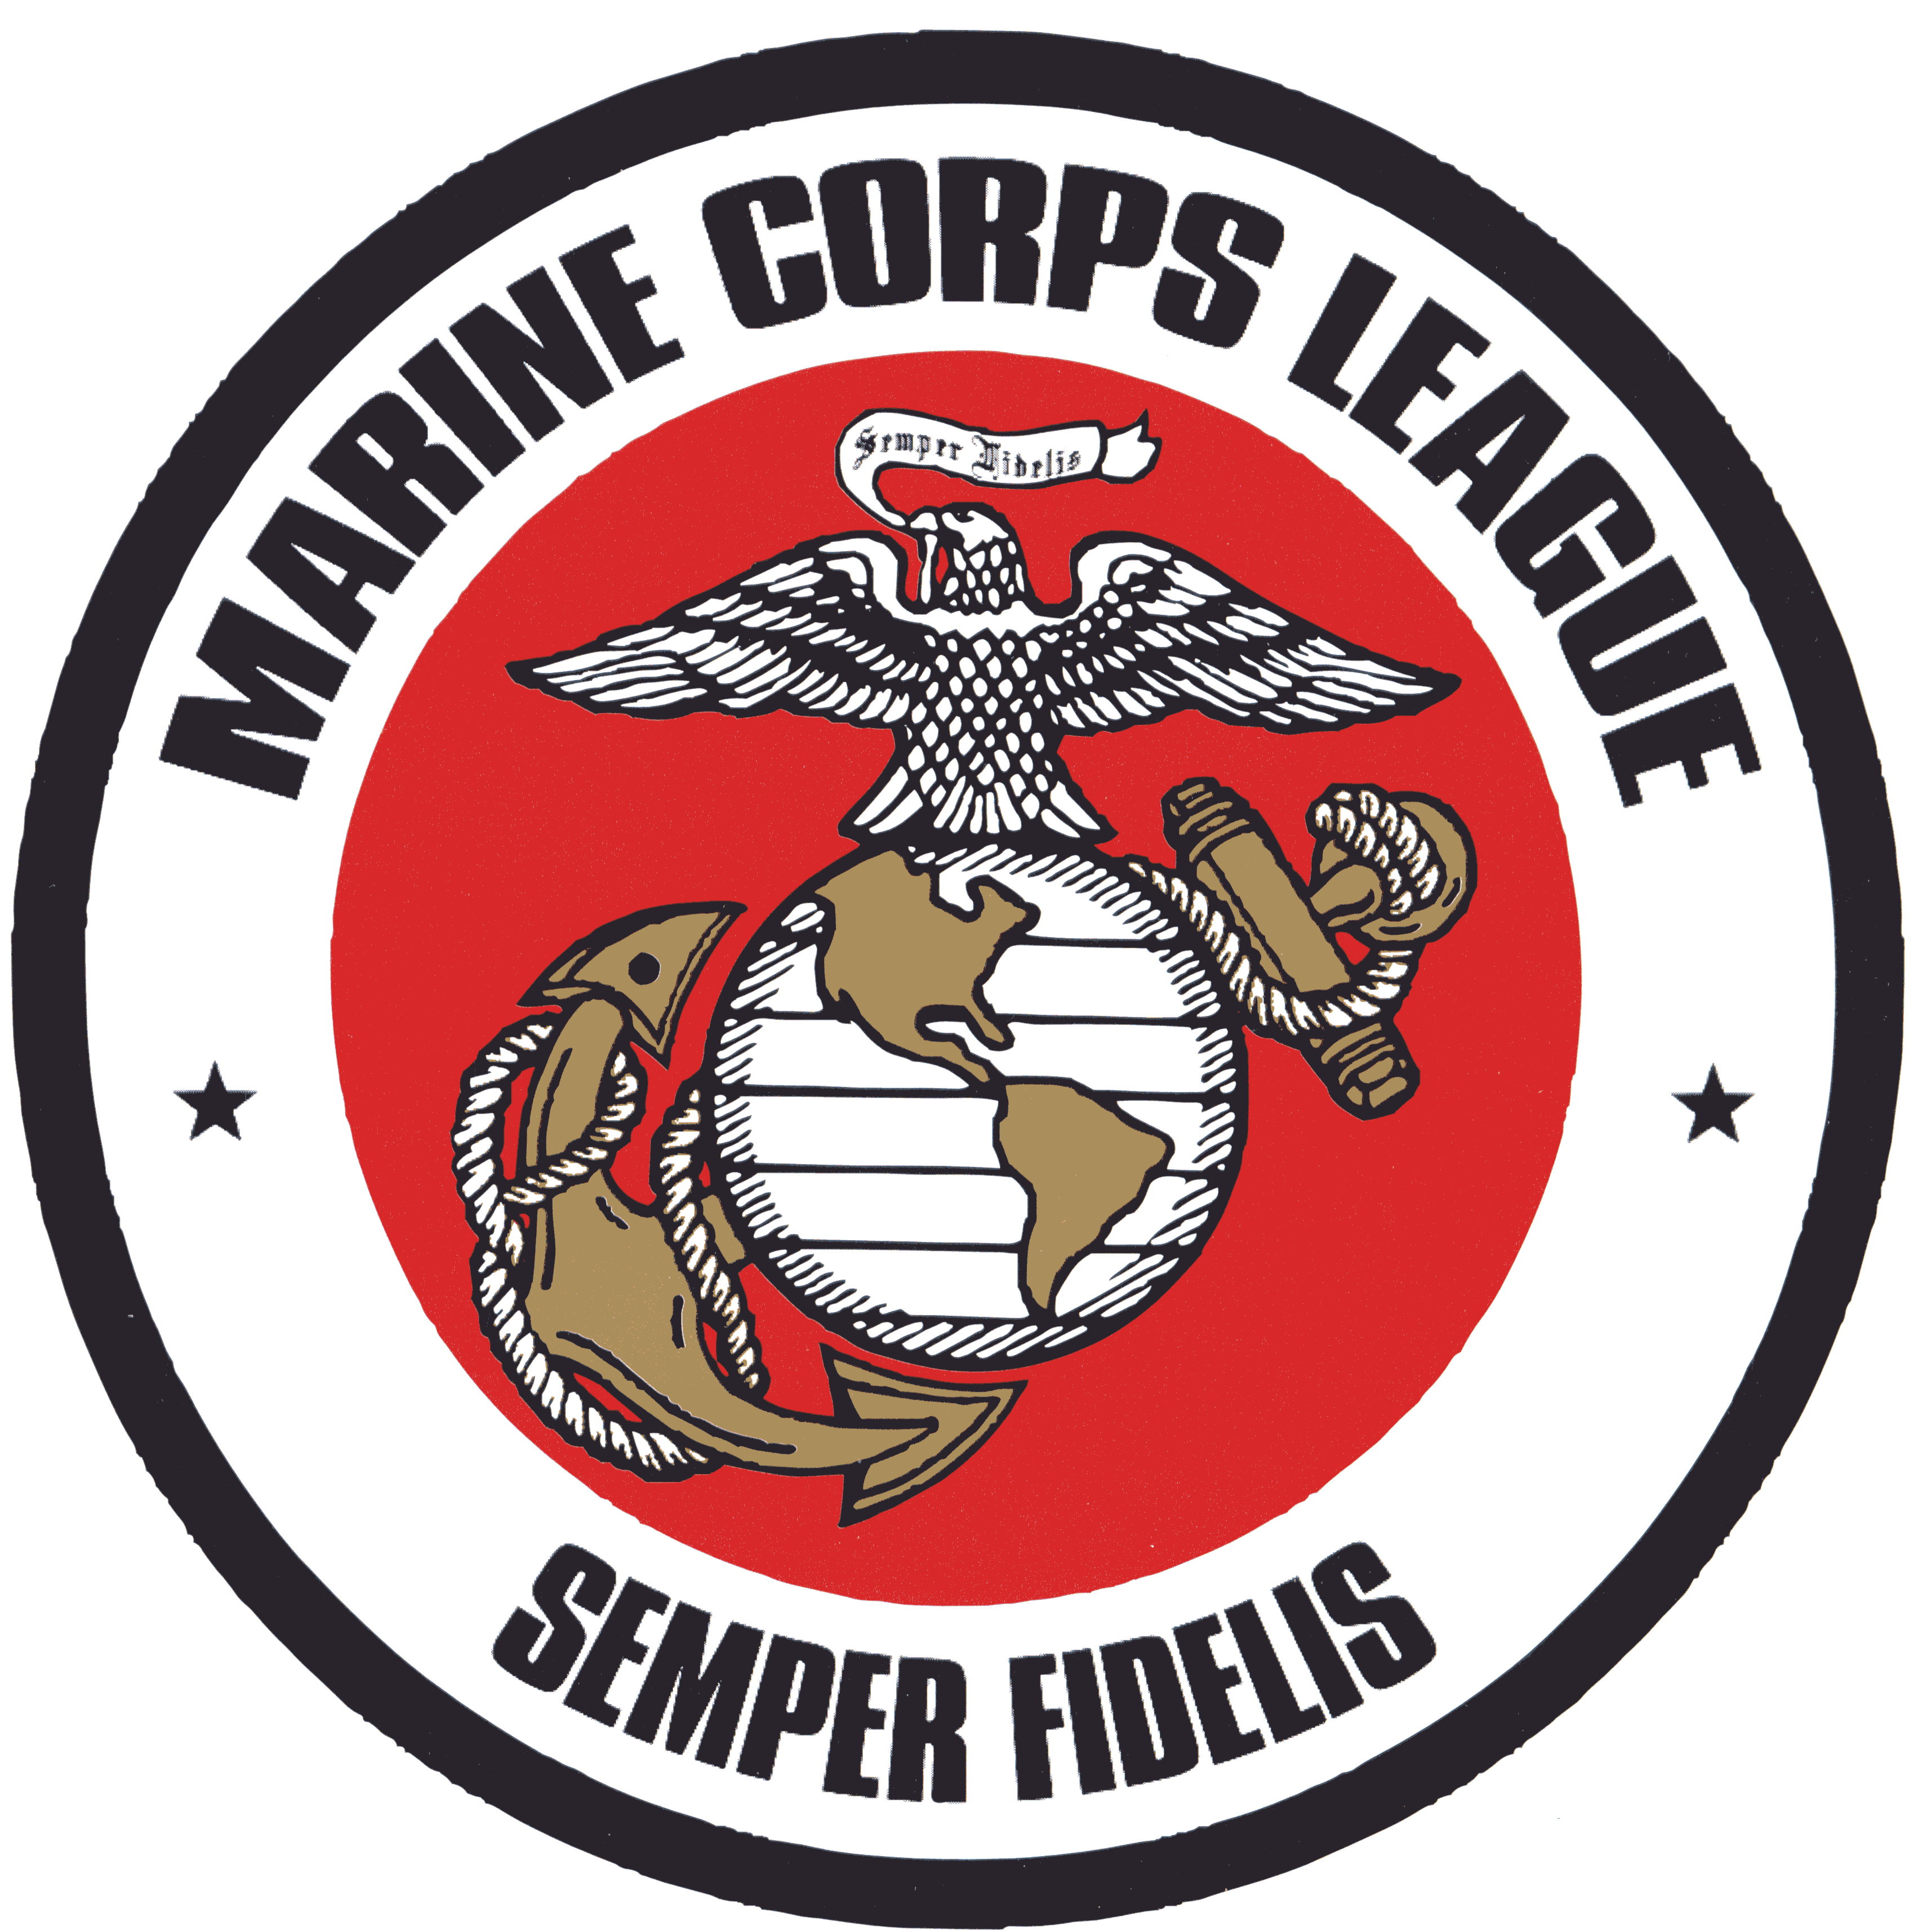 Marine Corps League Semper Fidelis